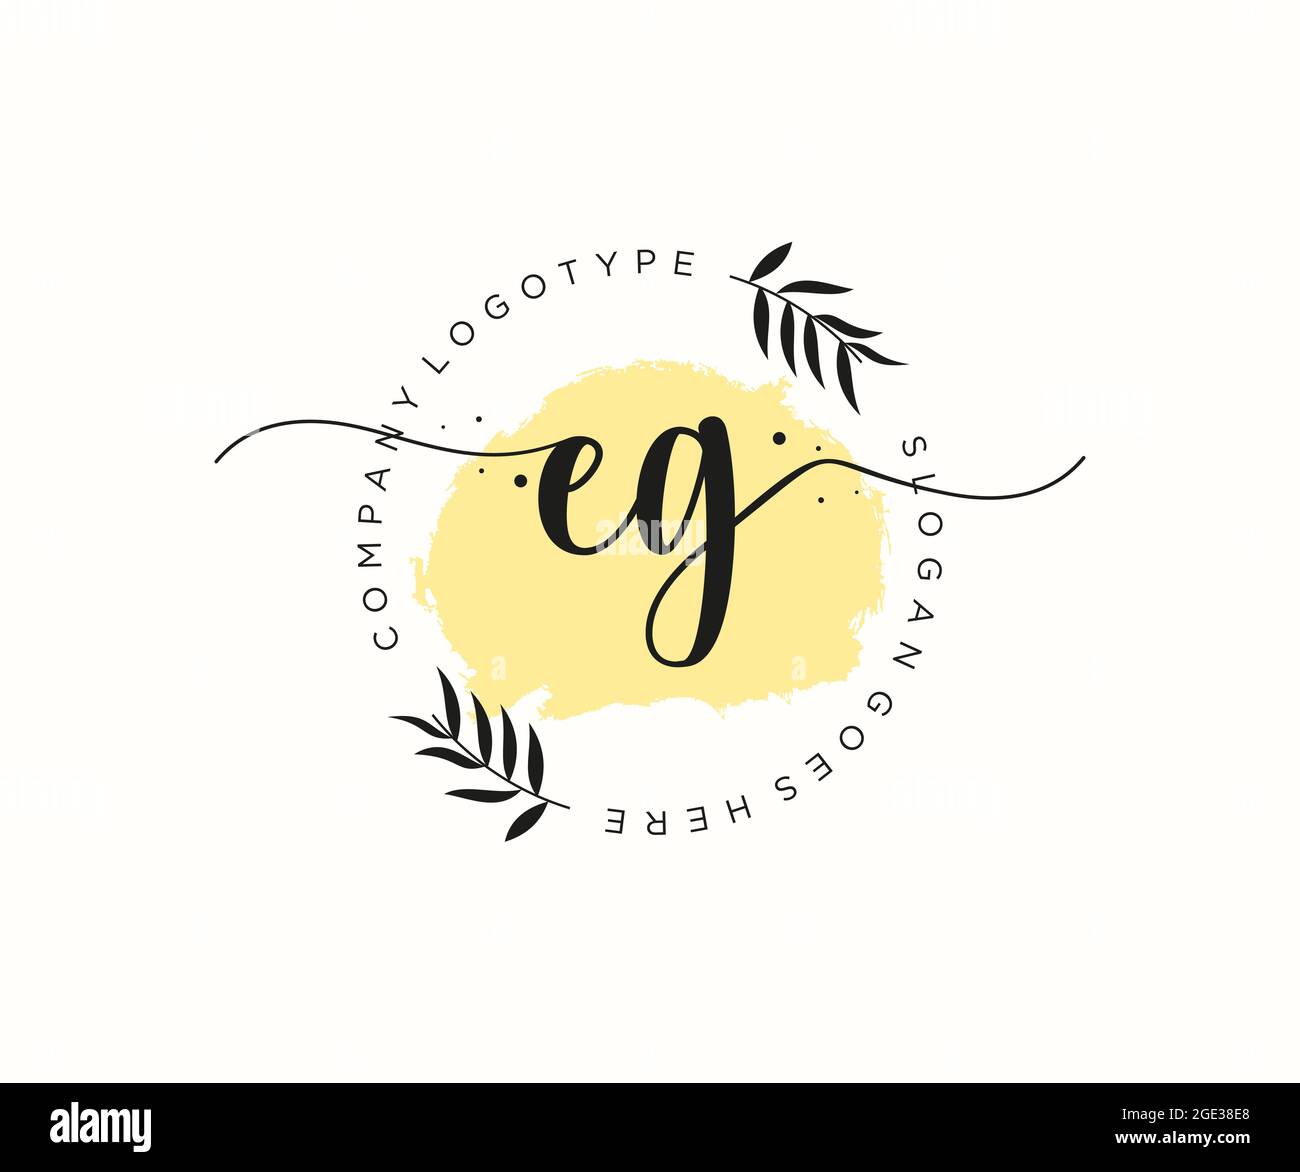 Initial Beauty Monogram Elegant Logo Design Handwriting Logo